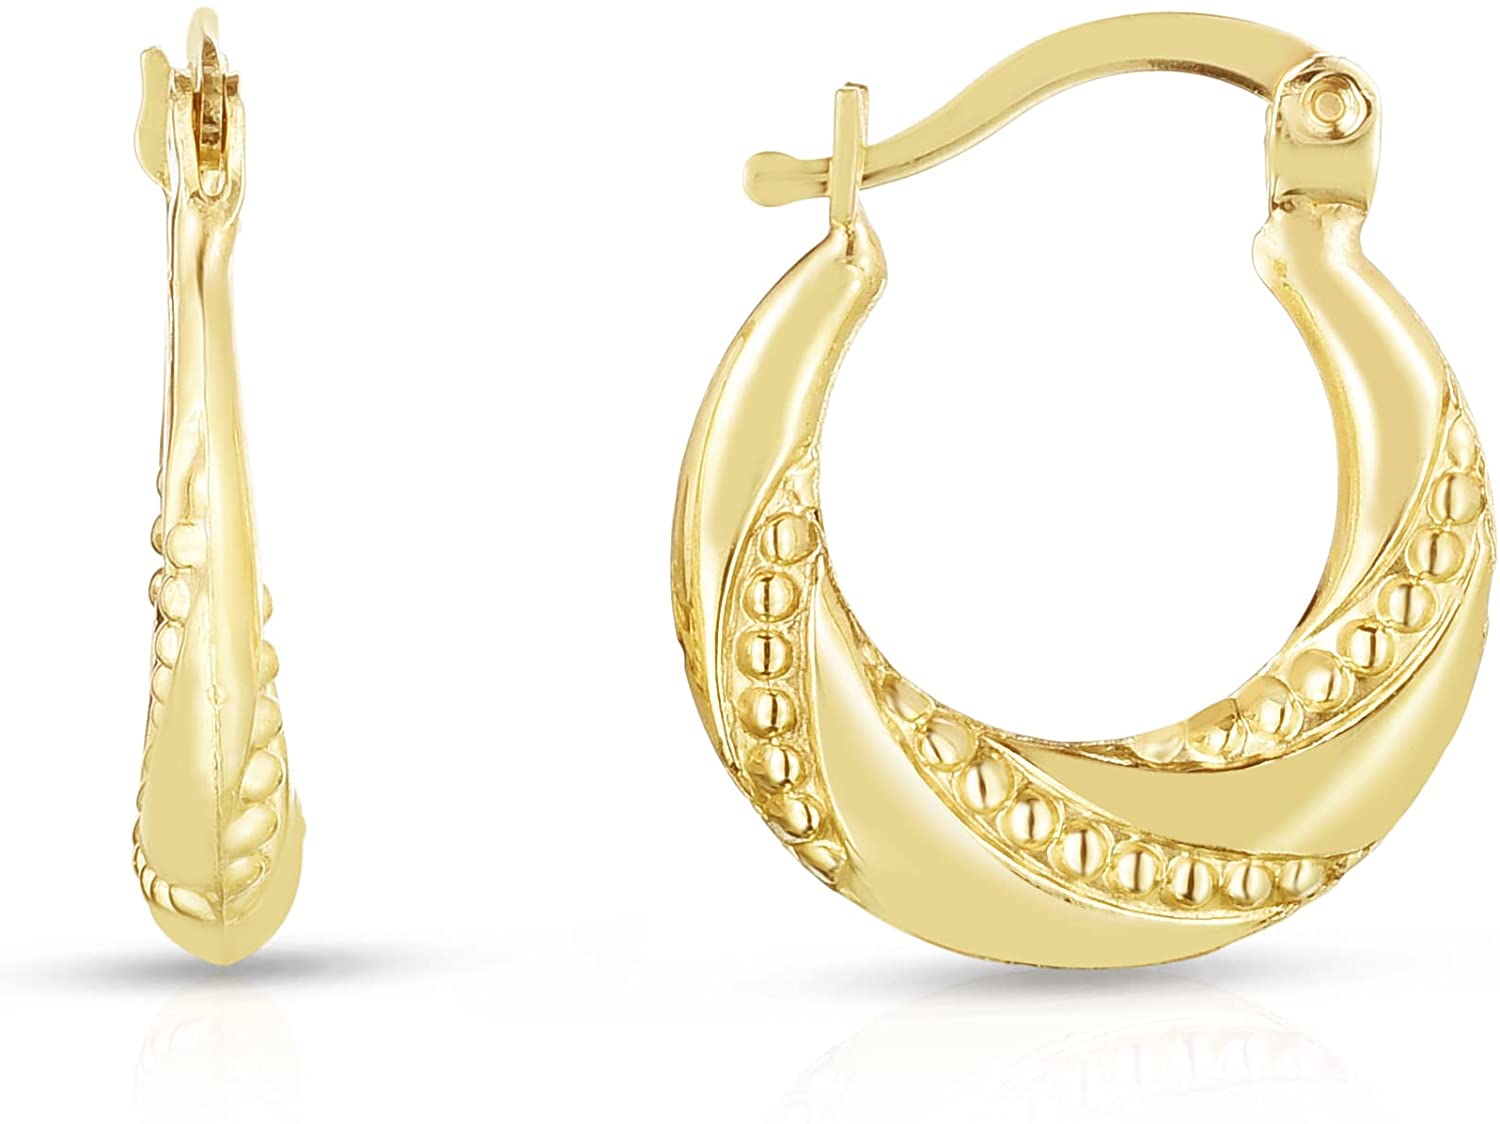 10k Yellow Gold High Polish Beaded Twisted Swirl Design Hoop Earrings